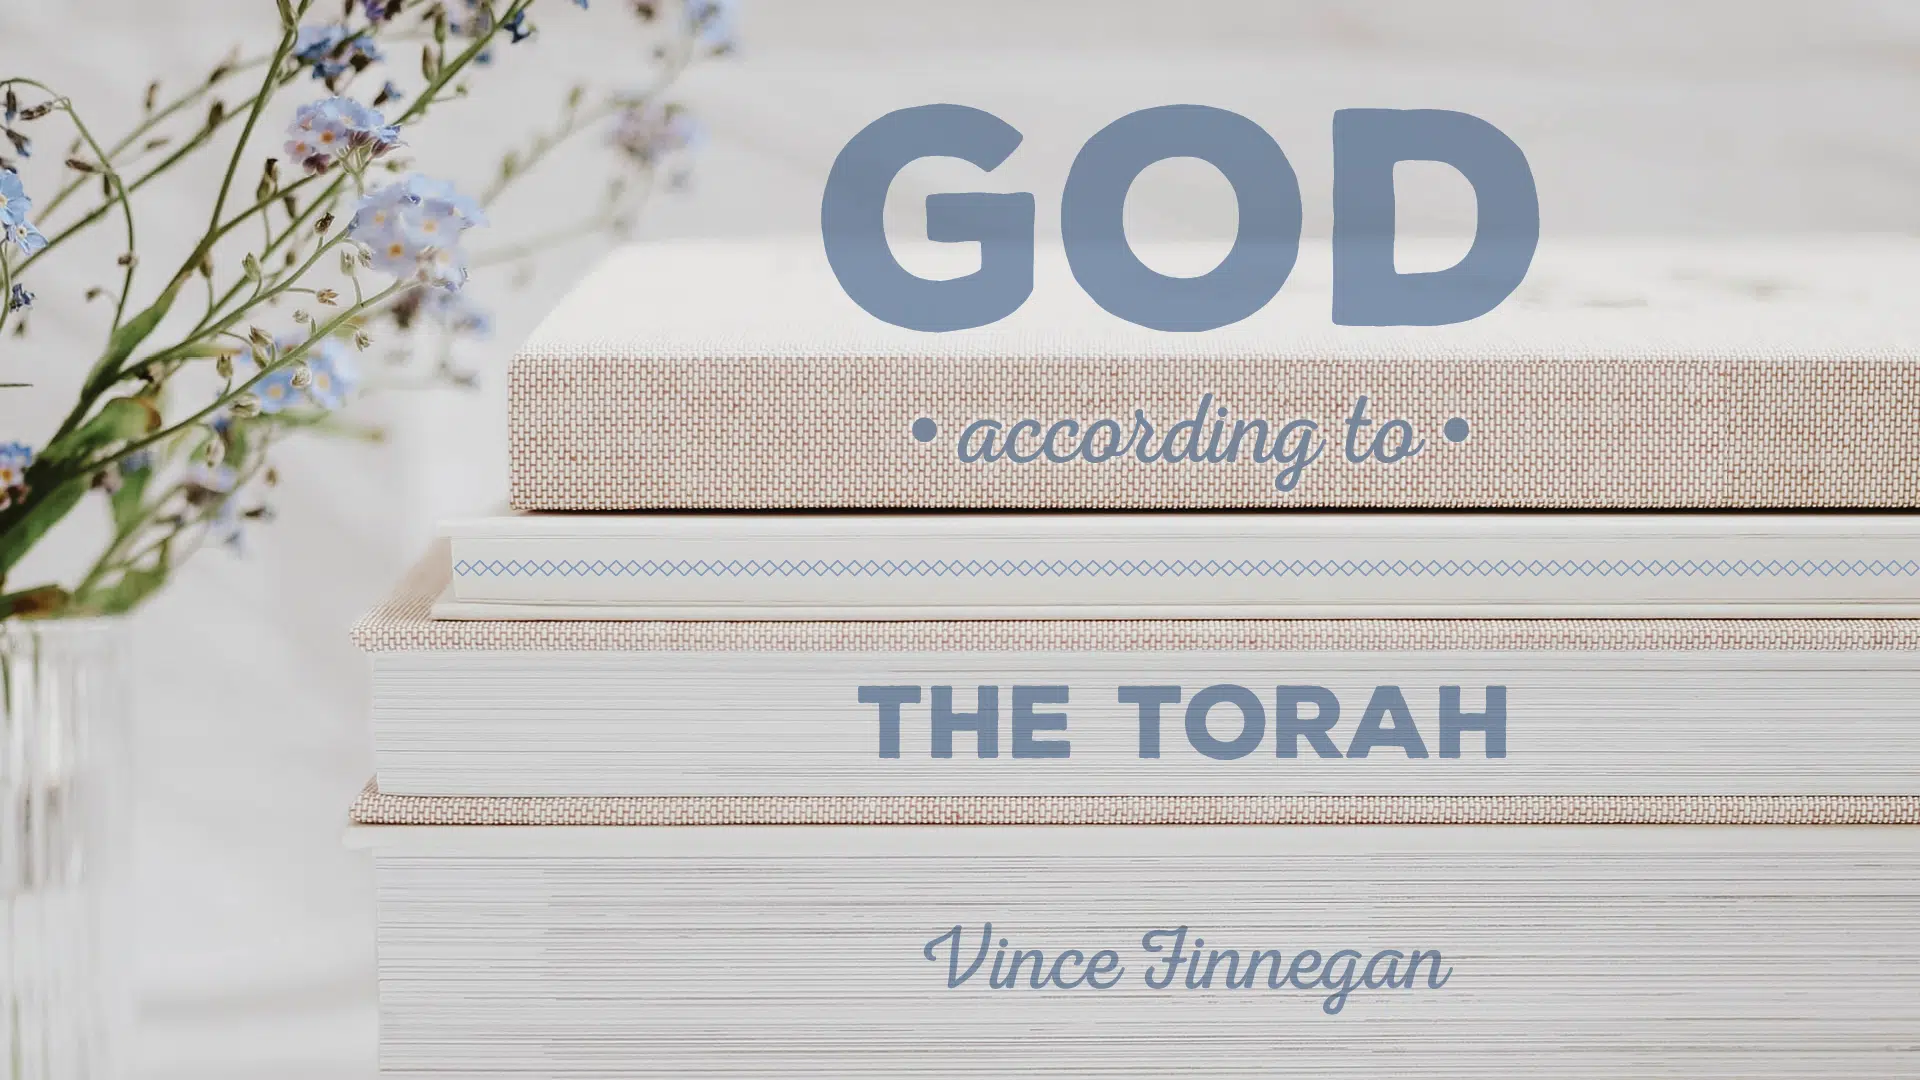 God According to the Torah